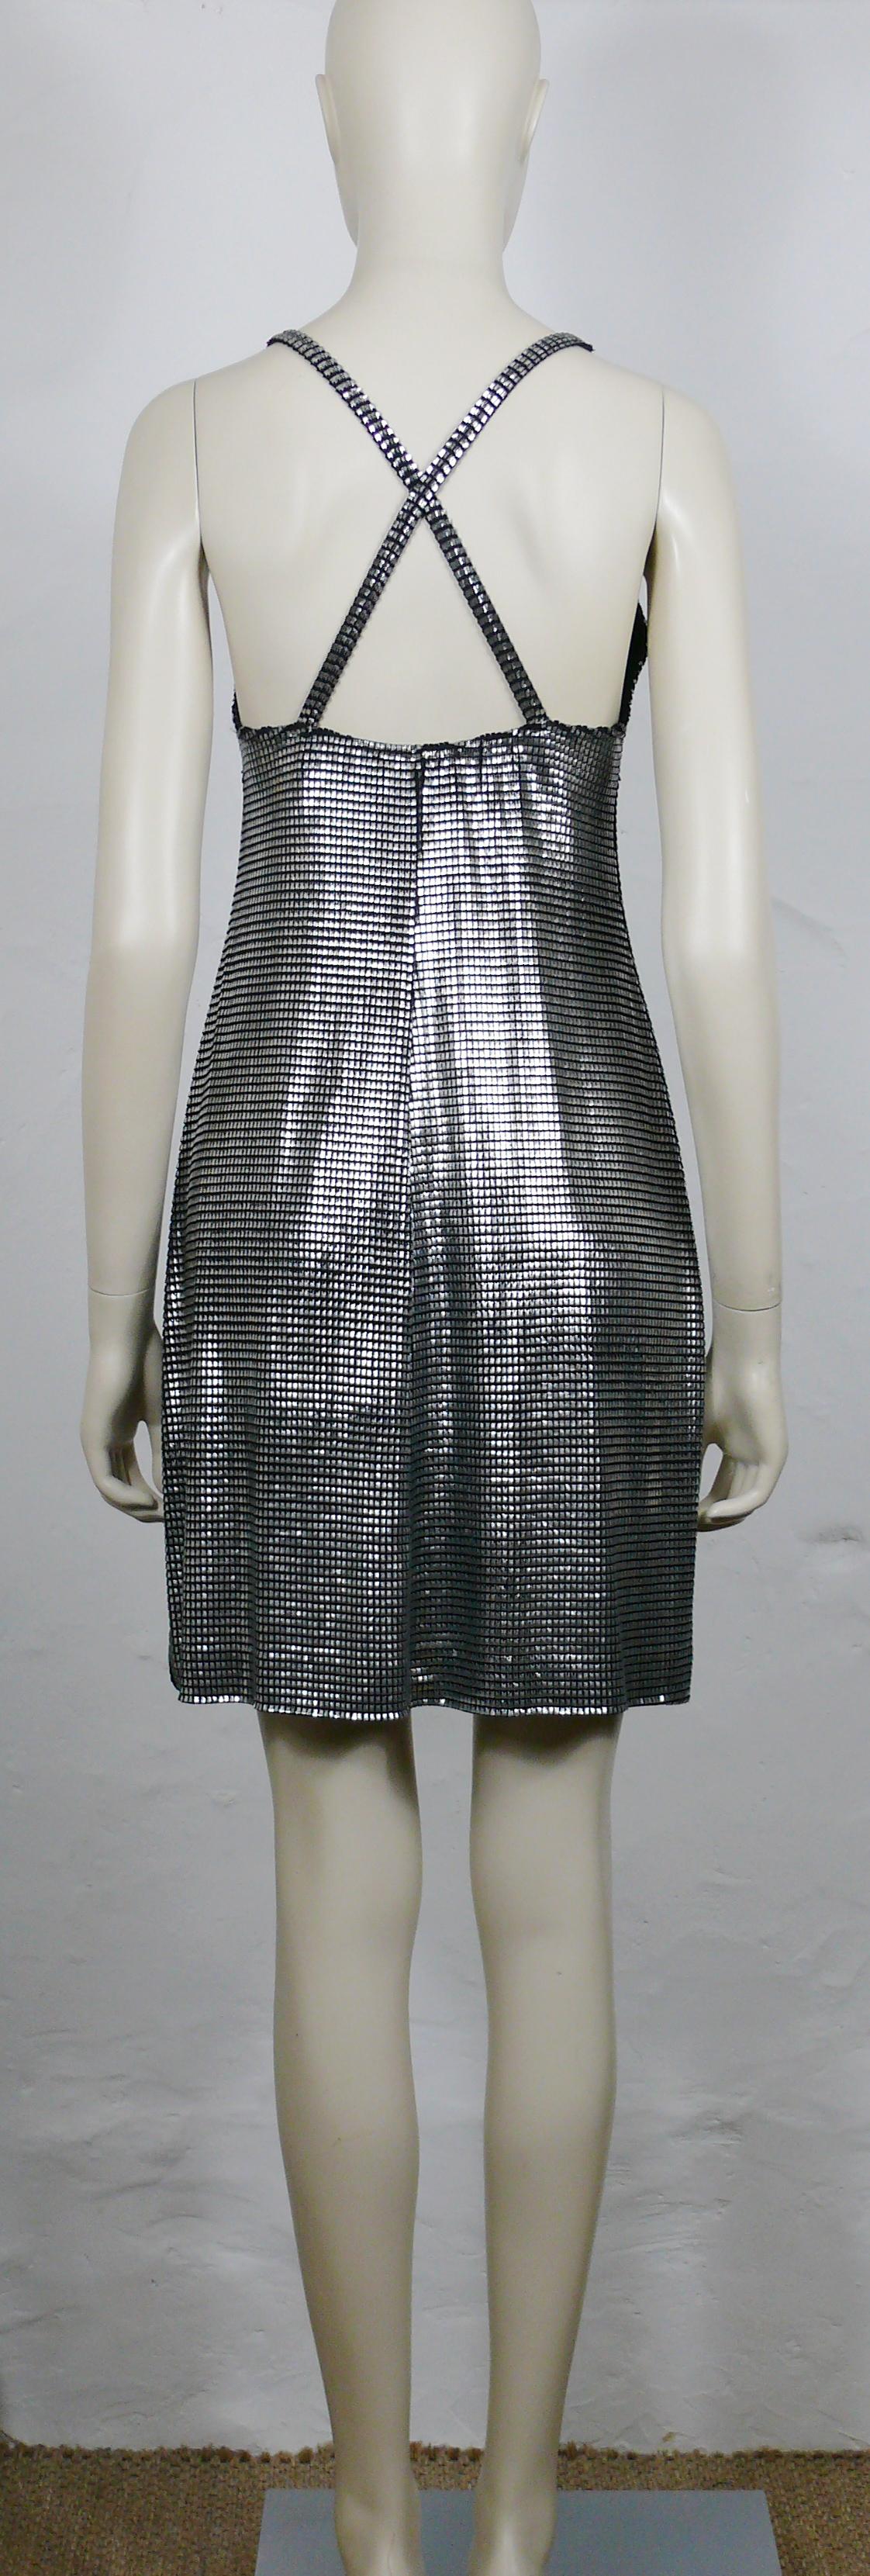 PACO RABANNE Silver Foil Grid Dress For Sale 6